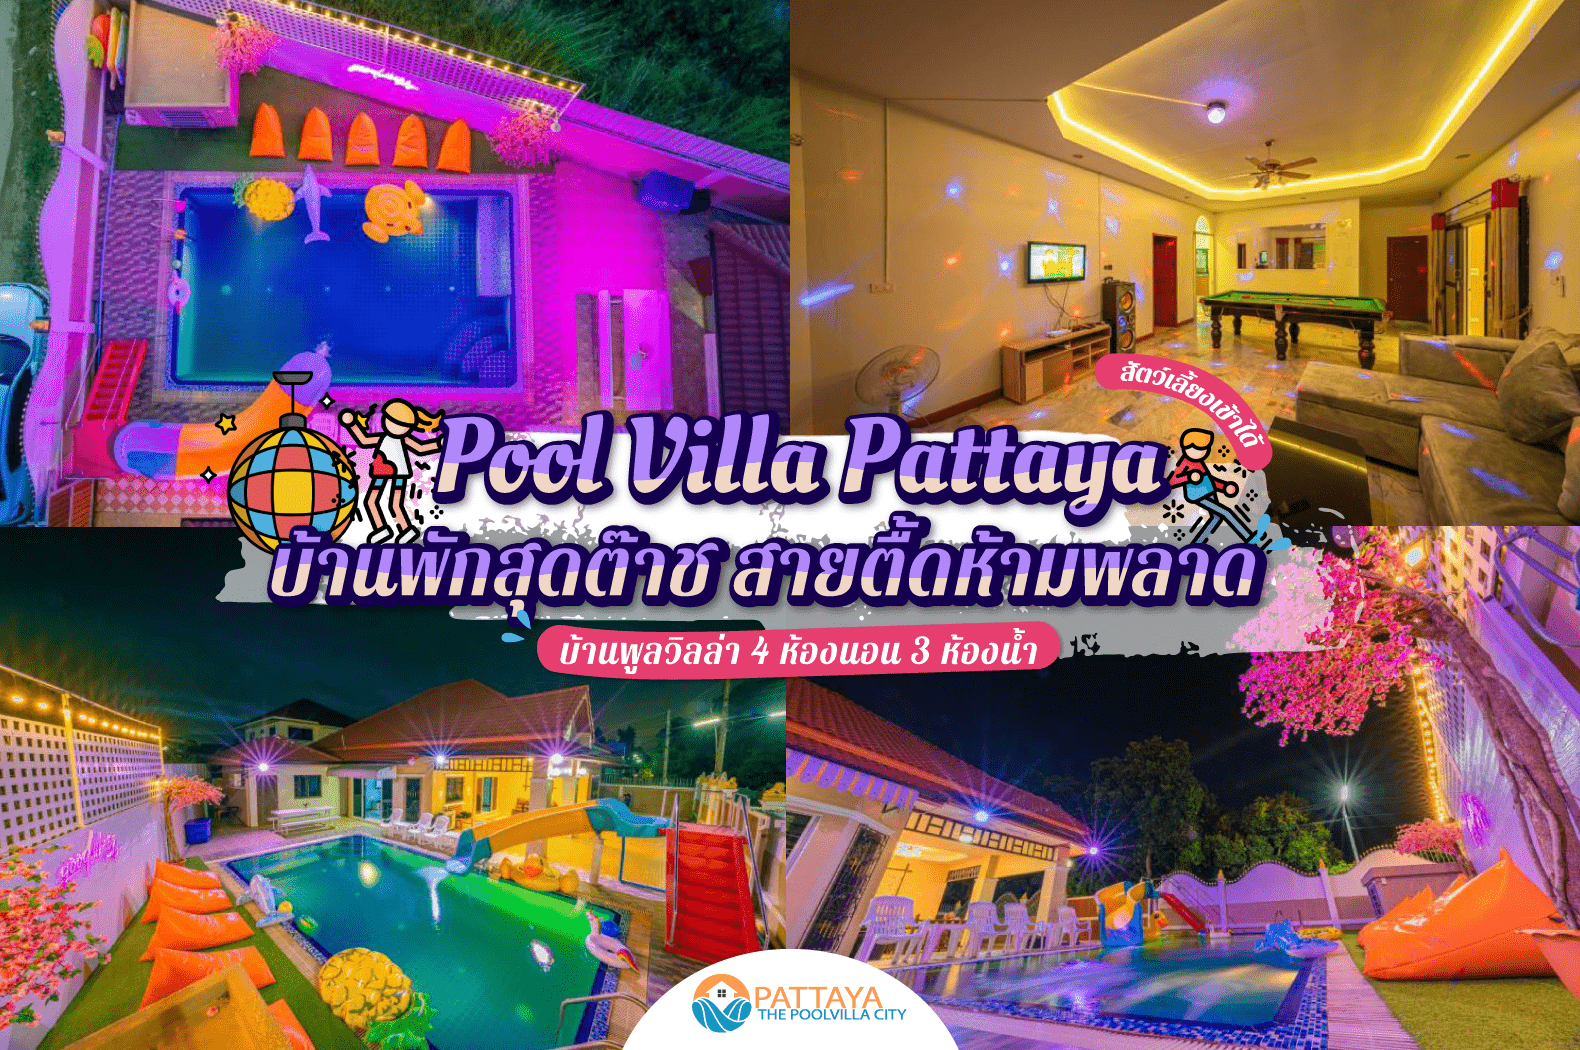 Pool Villa in Pattaya. DV-157